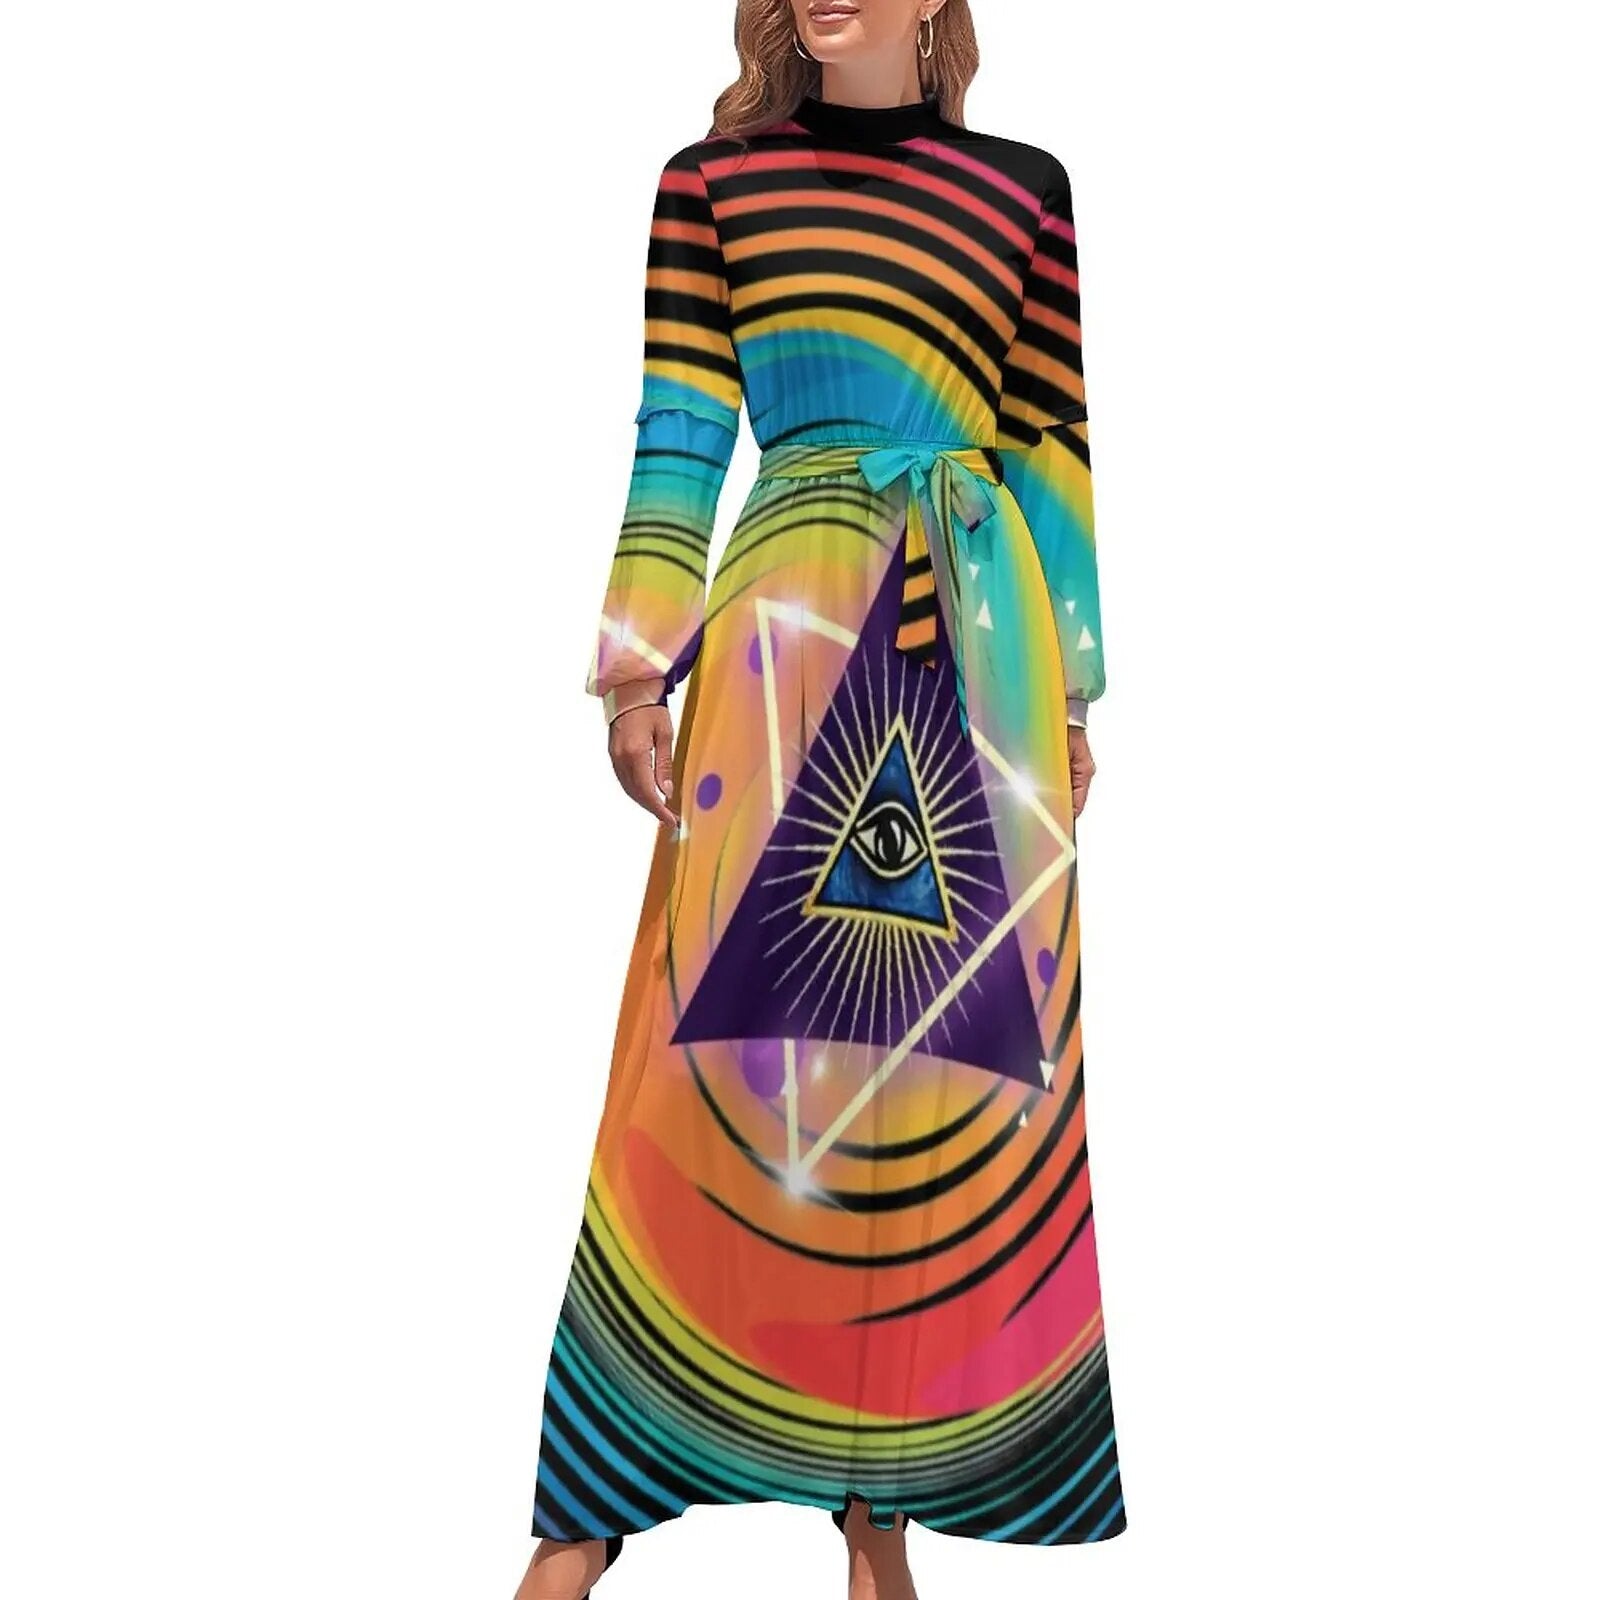 Synthetic Fiber Dress